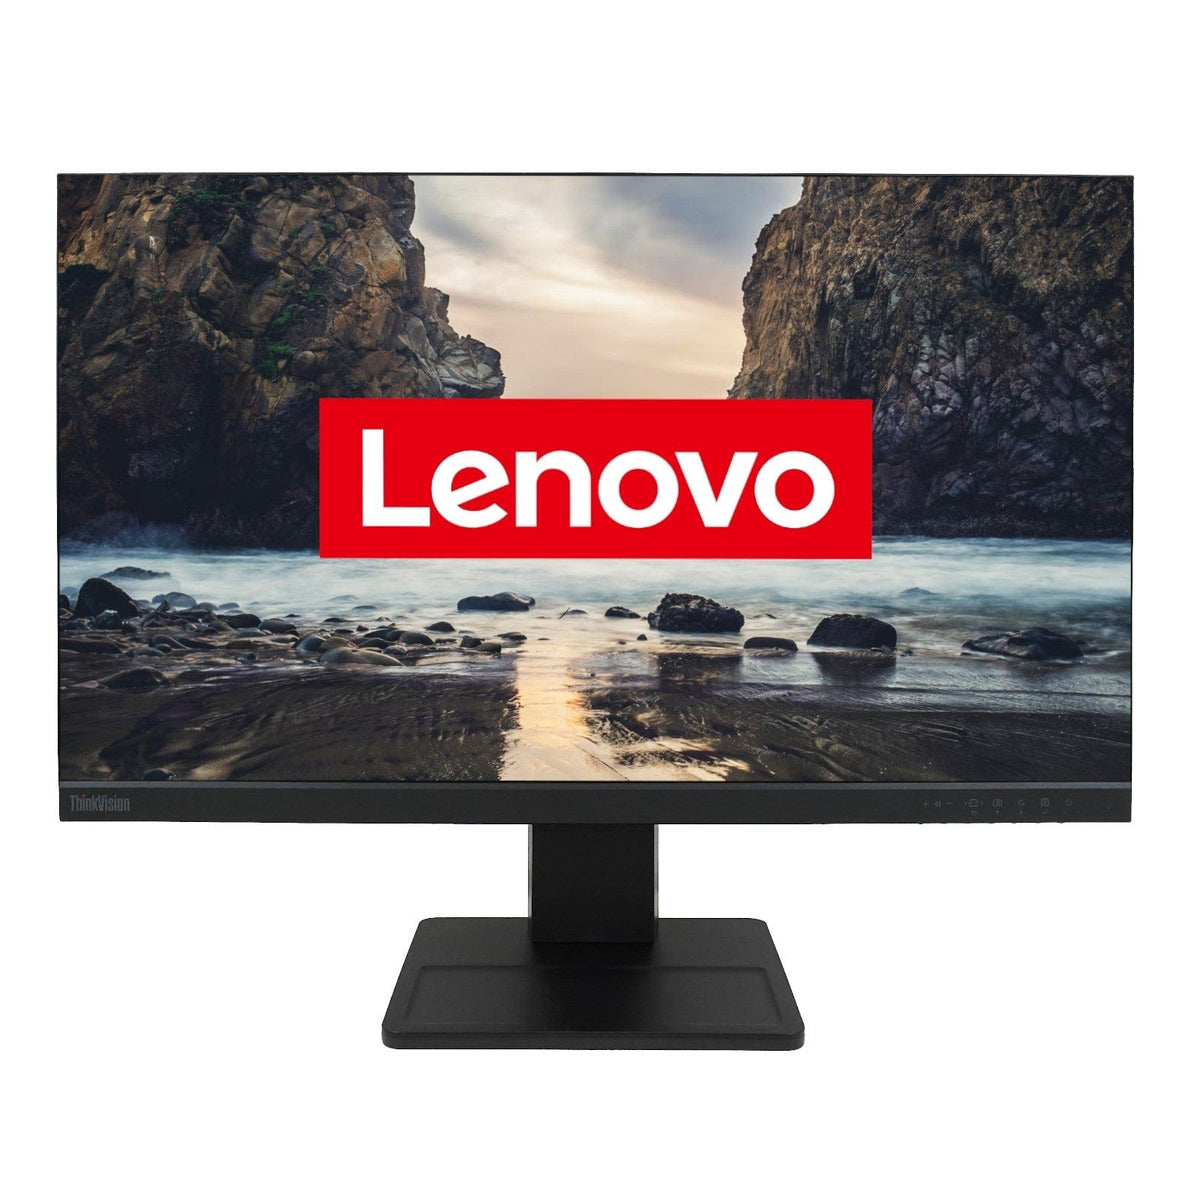 LENOVO Computer Monitors Lenovo ThinkVision E24-28 24" IPS Full HD Monitor